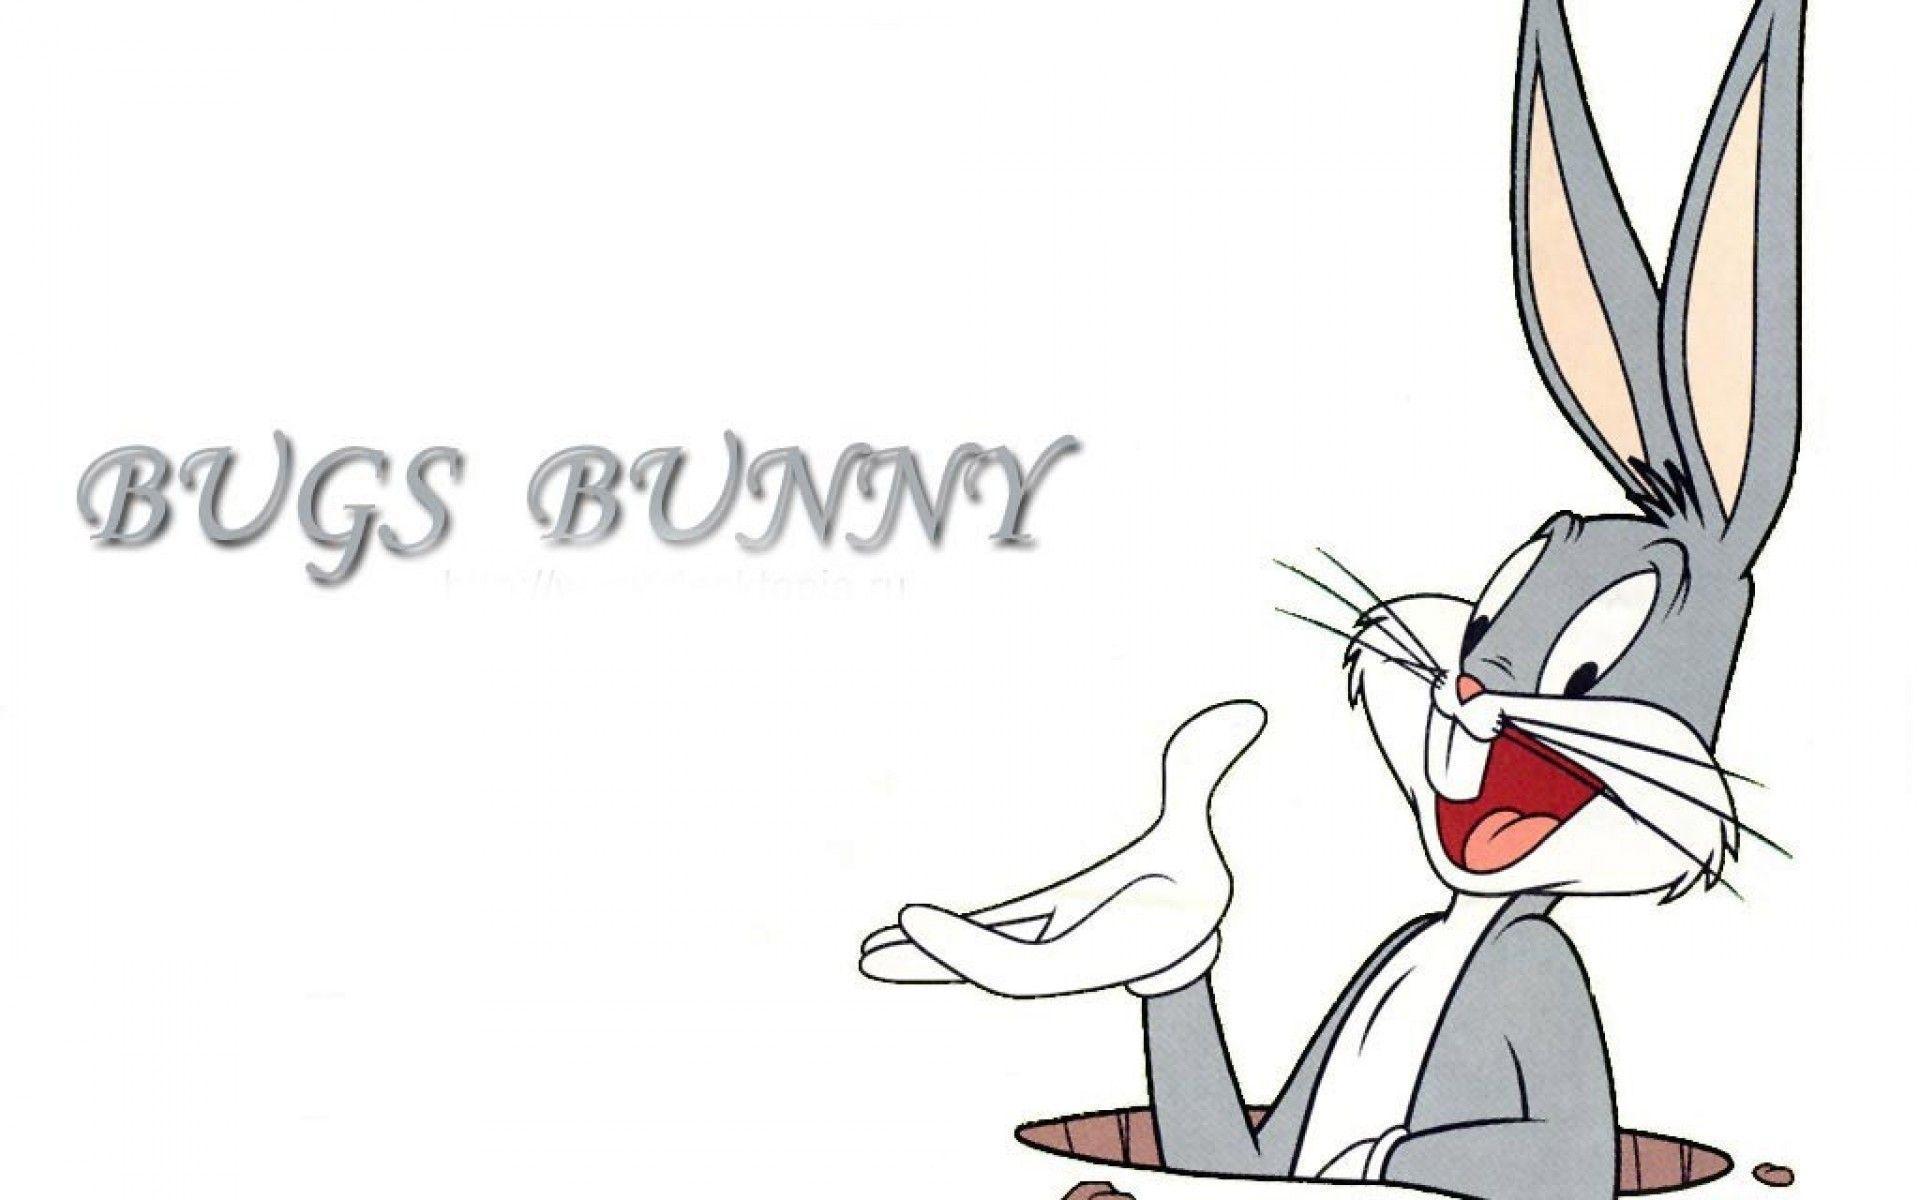 Bugs Bunny Background